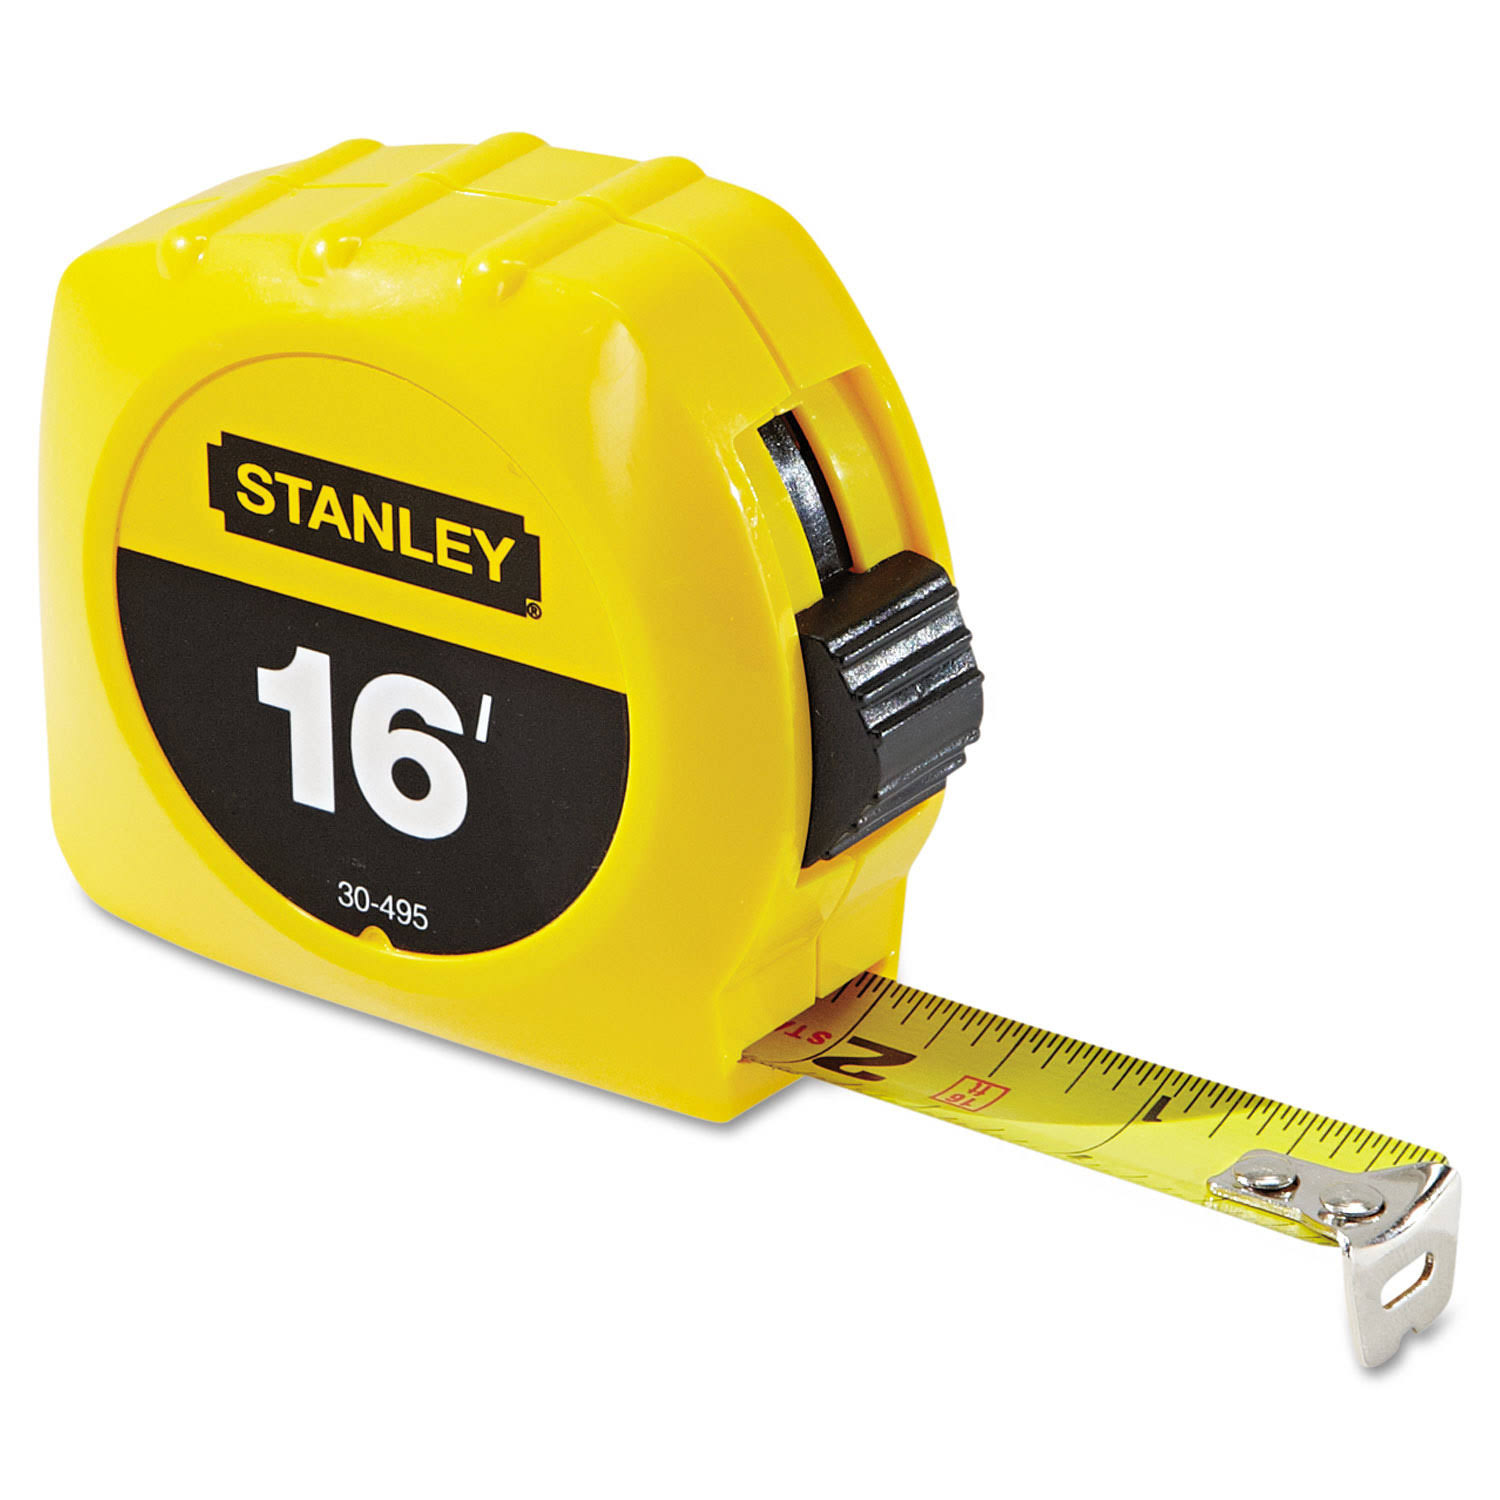 Stanley Tape Measure - 16' X 3/4"